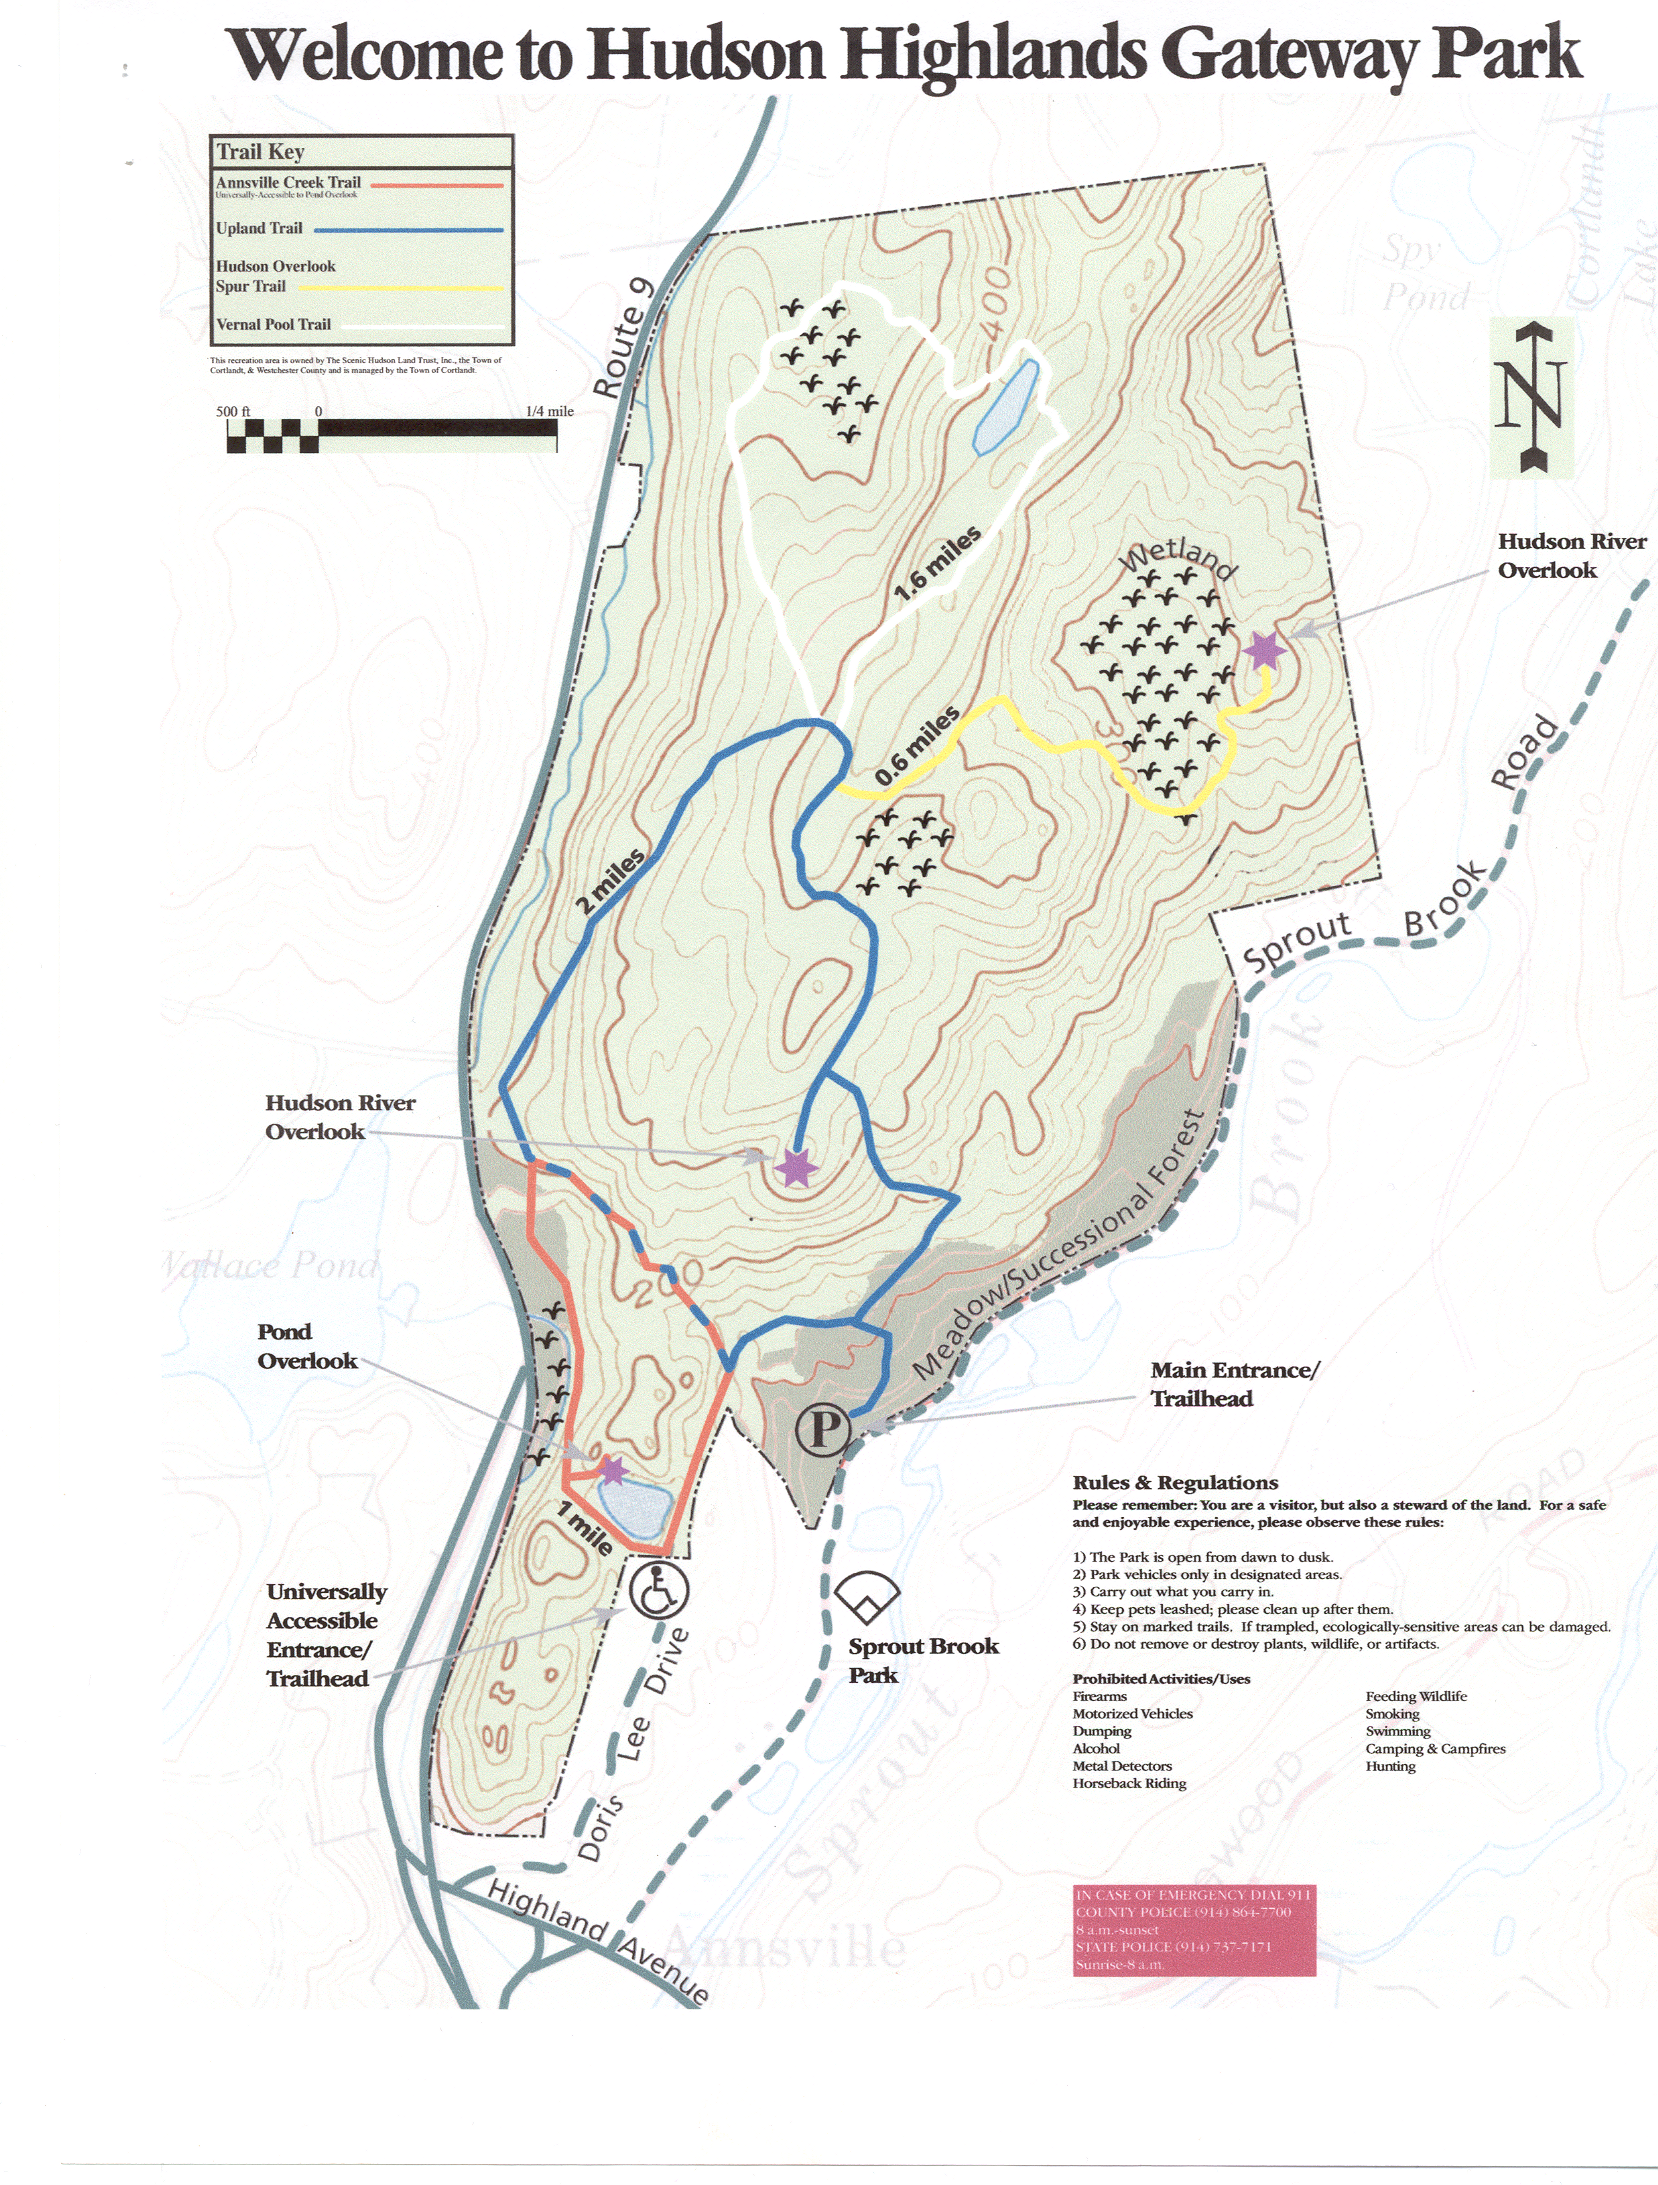 Map of the Hudson Highlands Gateway Park